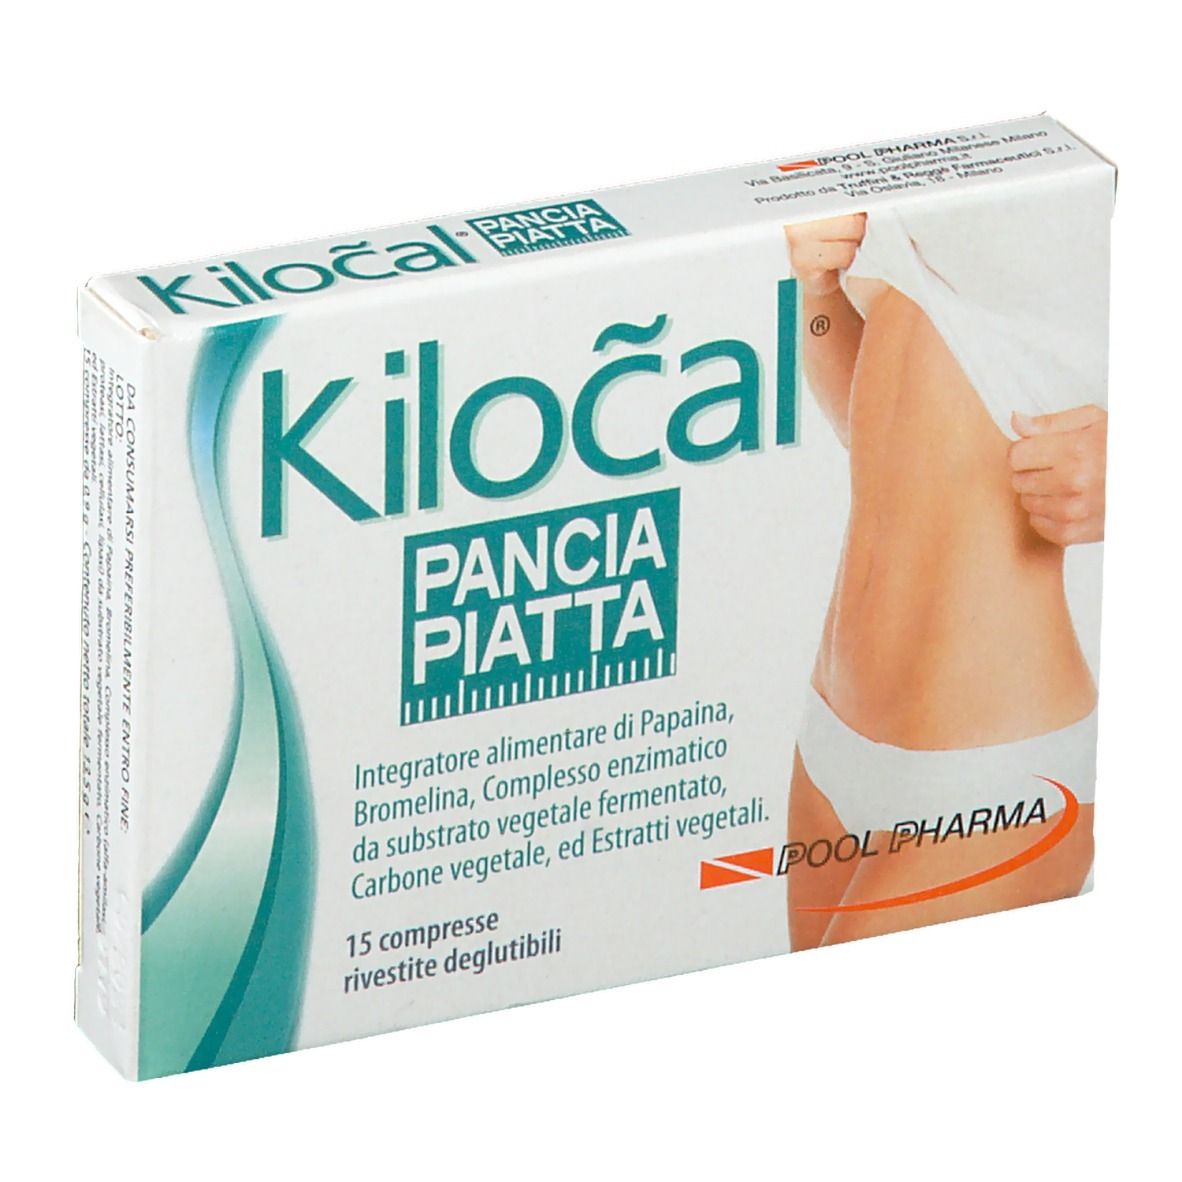 Image of Kilocal PANCIA PIATTA